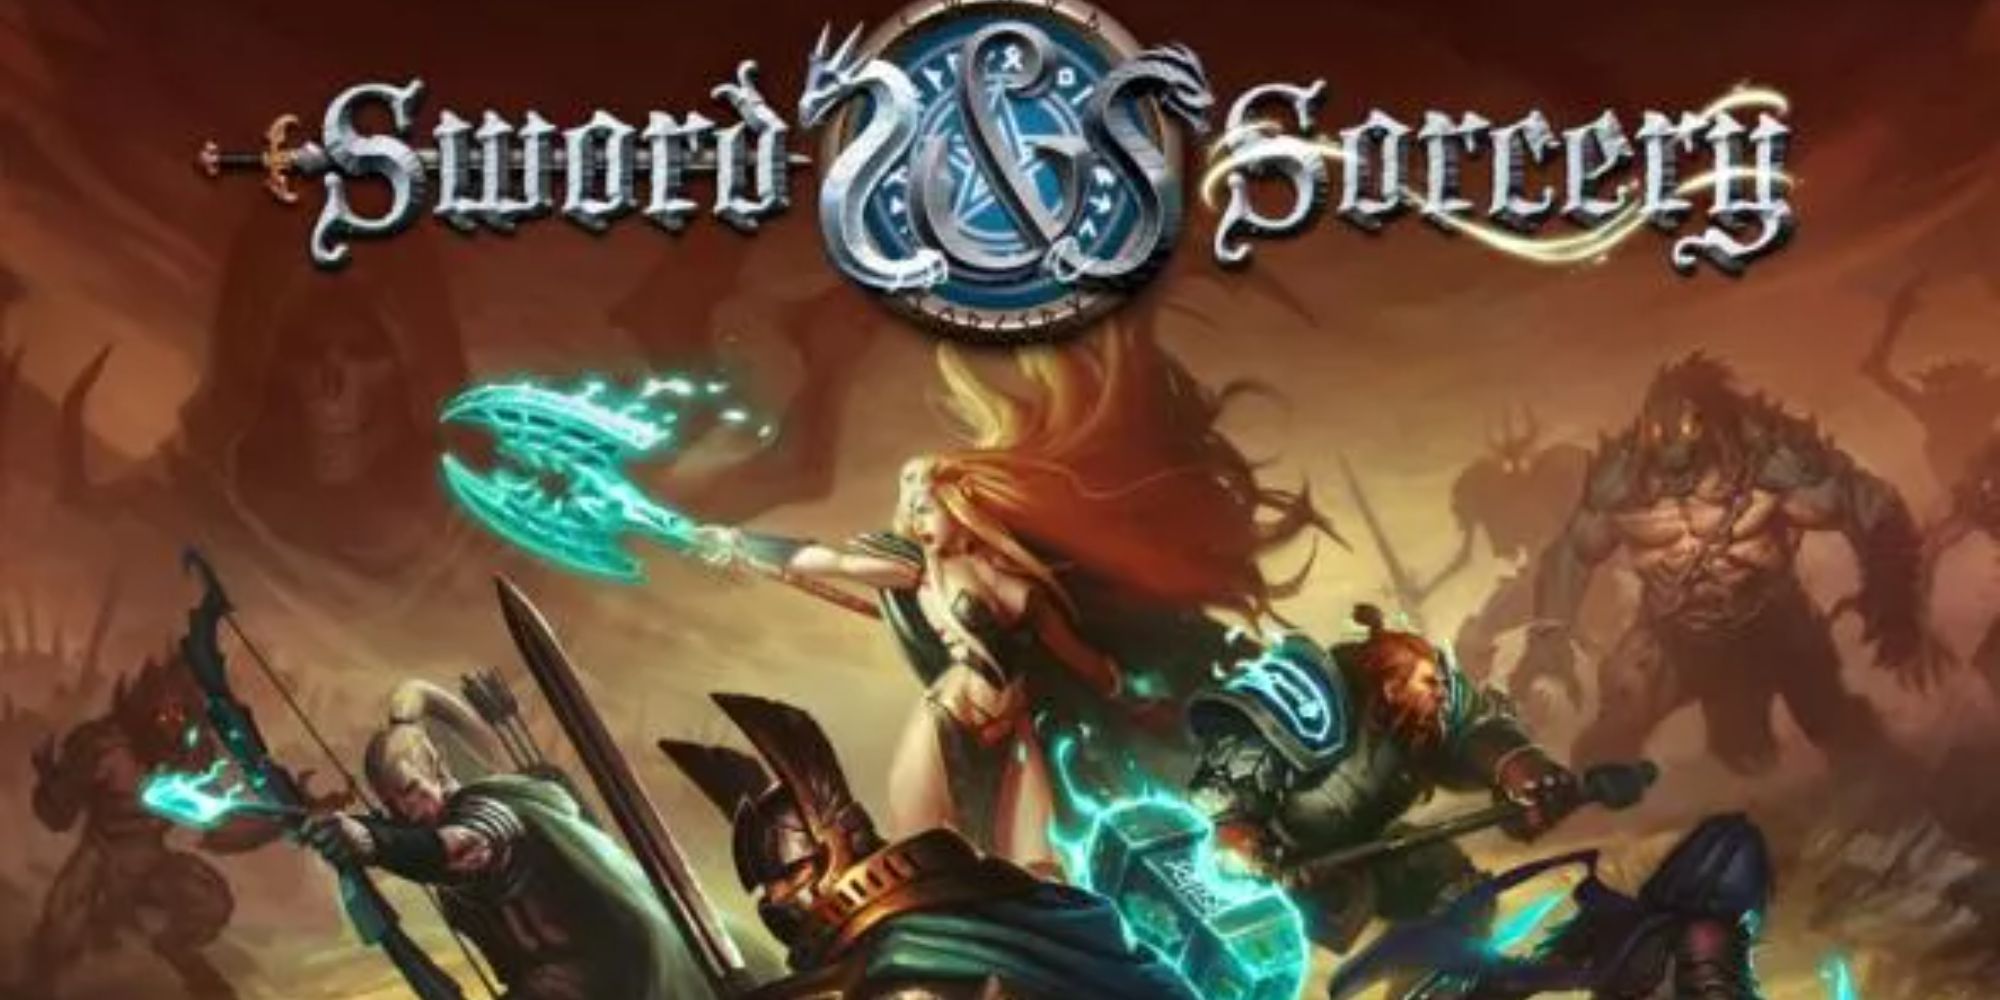 Sword & Sorcery board game cover